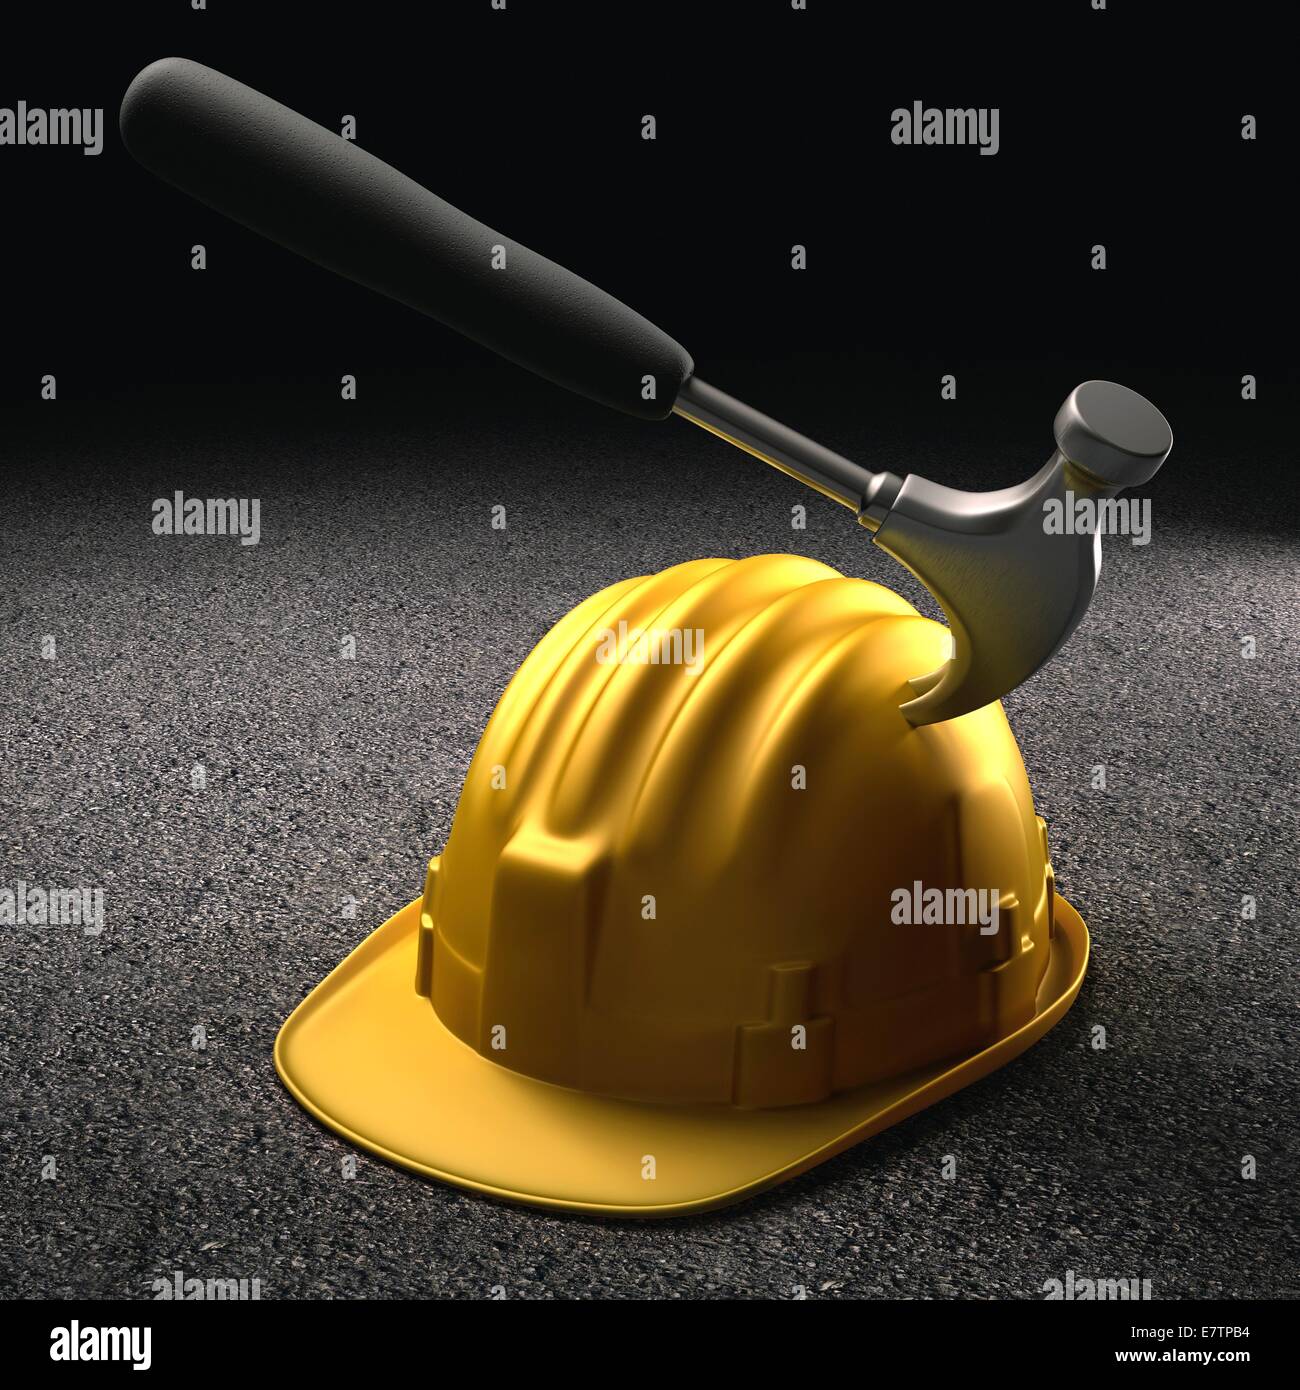 Hammer hitting a hard hat, conceptual artwork. Stock Photo